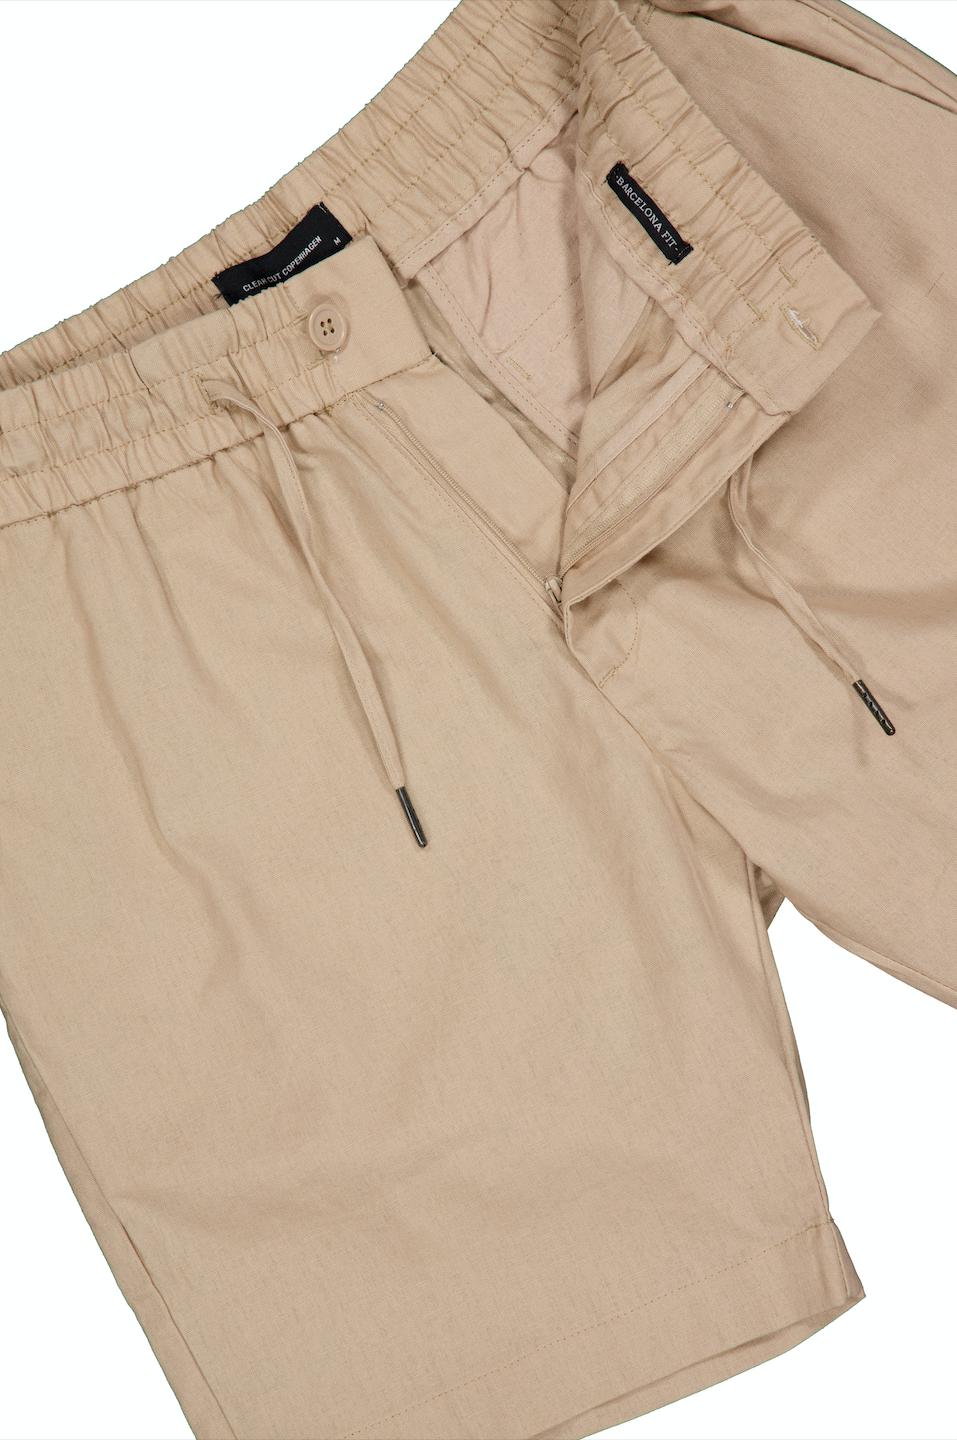 Barcelona Cotton/Linen Shorts Khaki-Shorts-Bogartstore